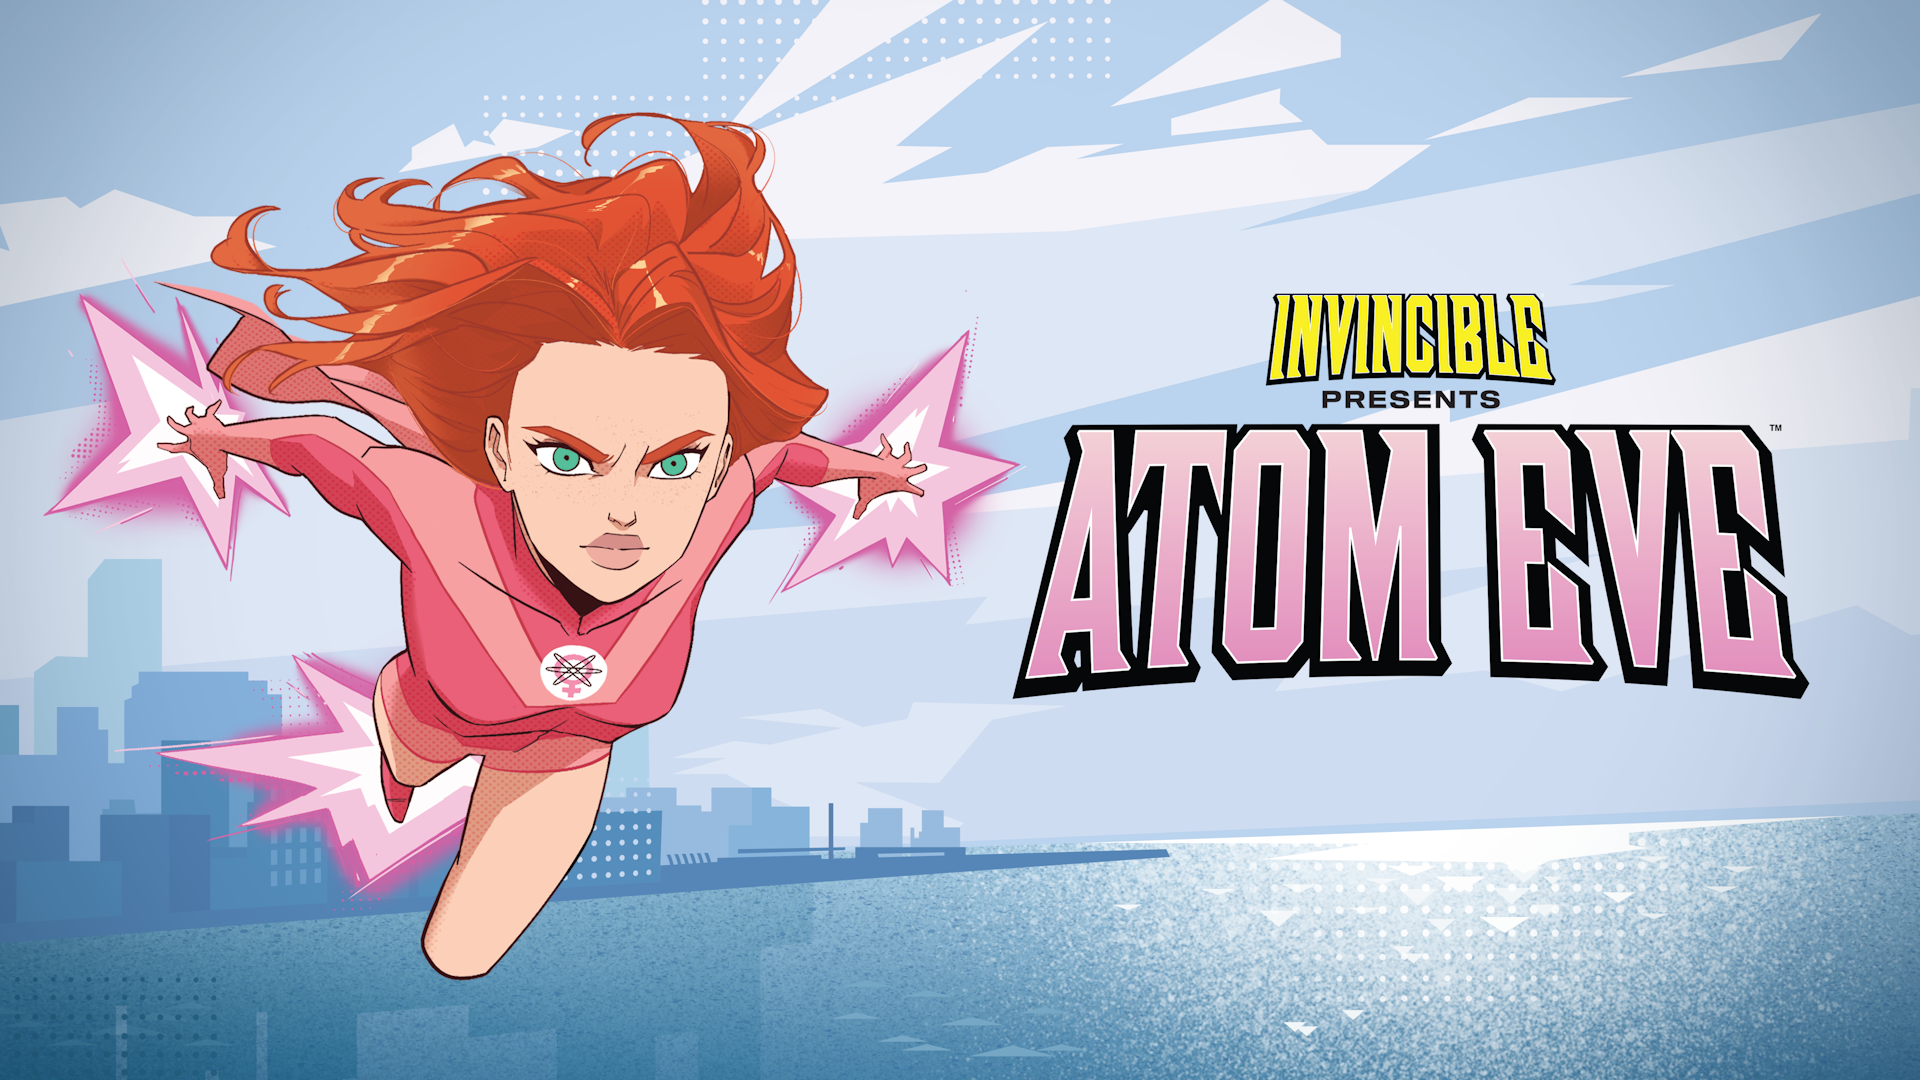 Key Art aus dem Videospiel Invincible Presents: Atom Eve